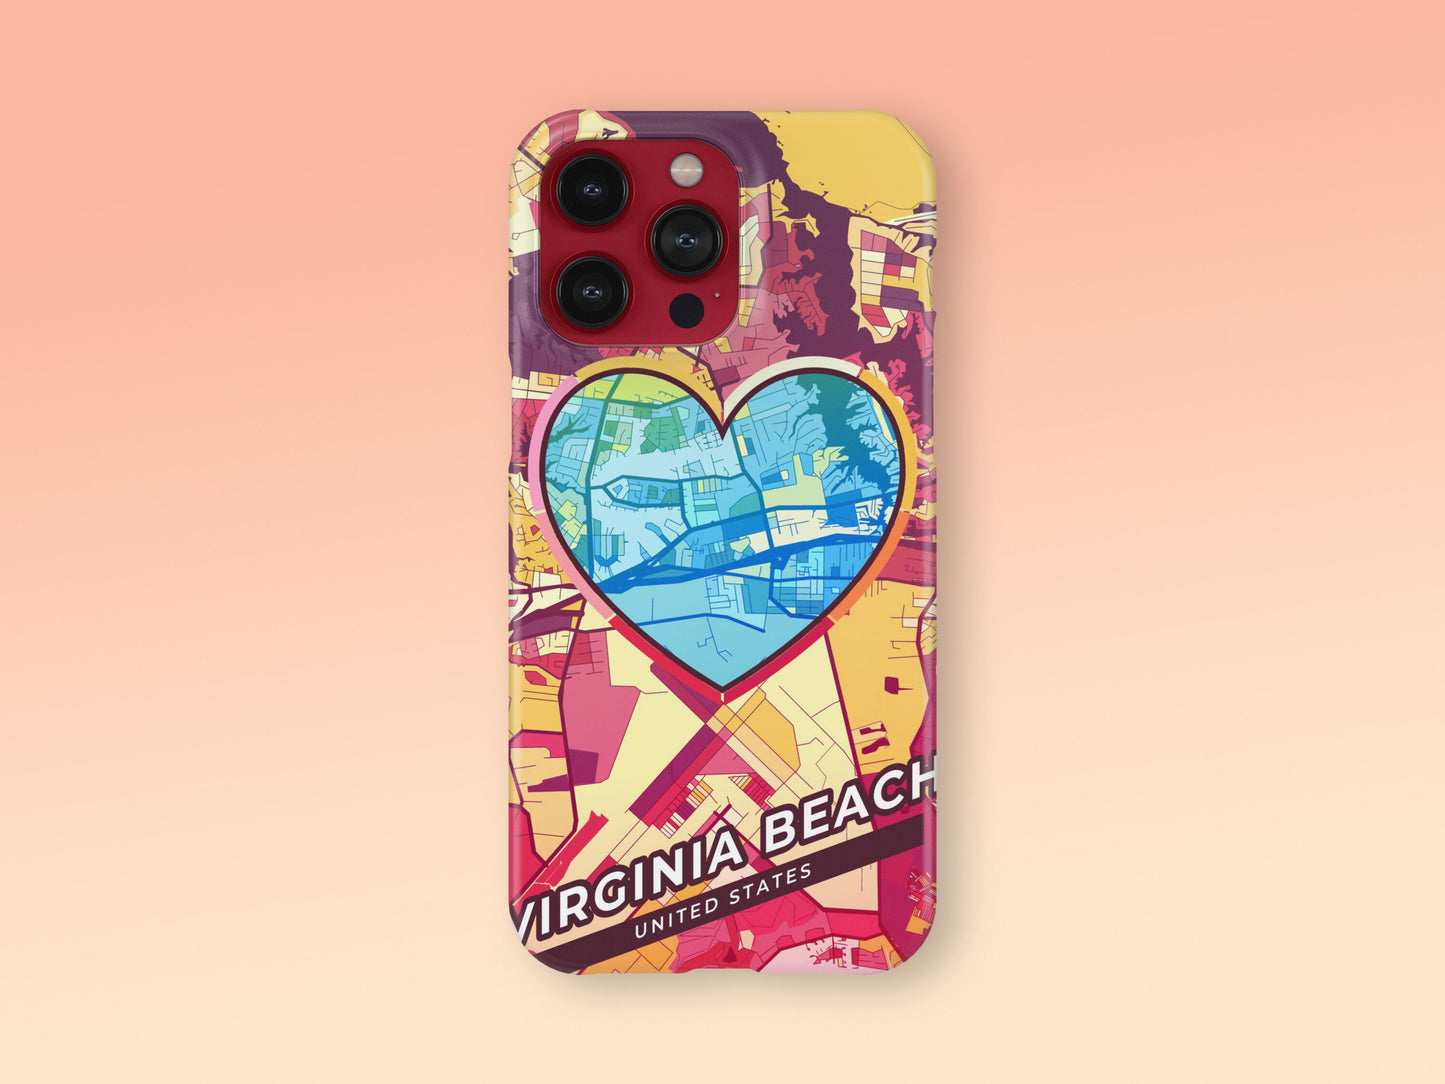 Virginia Beach Virginia slim phone case with colorful icon 2